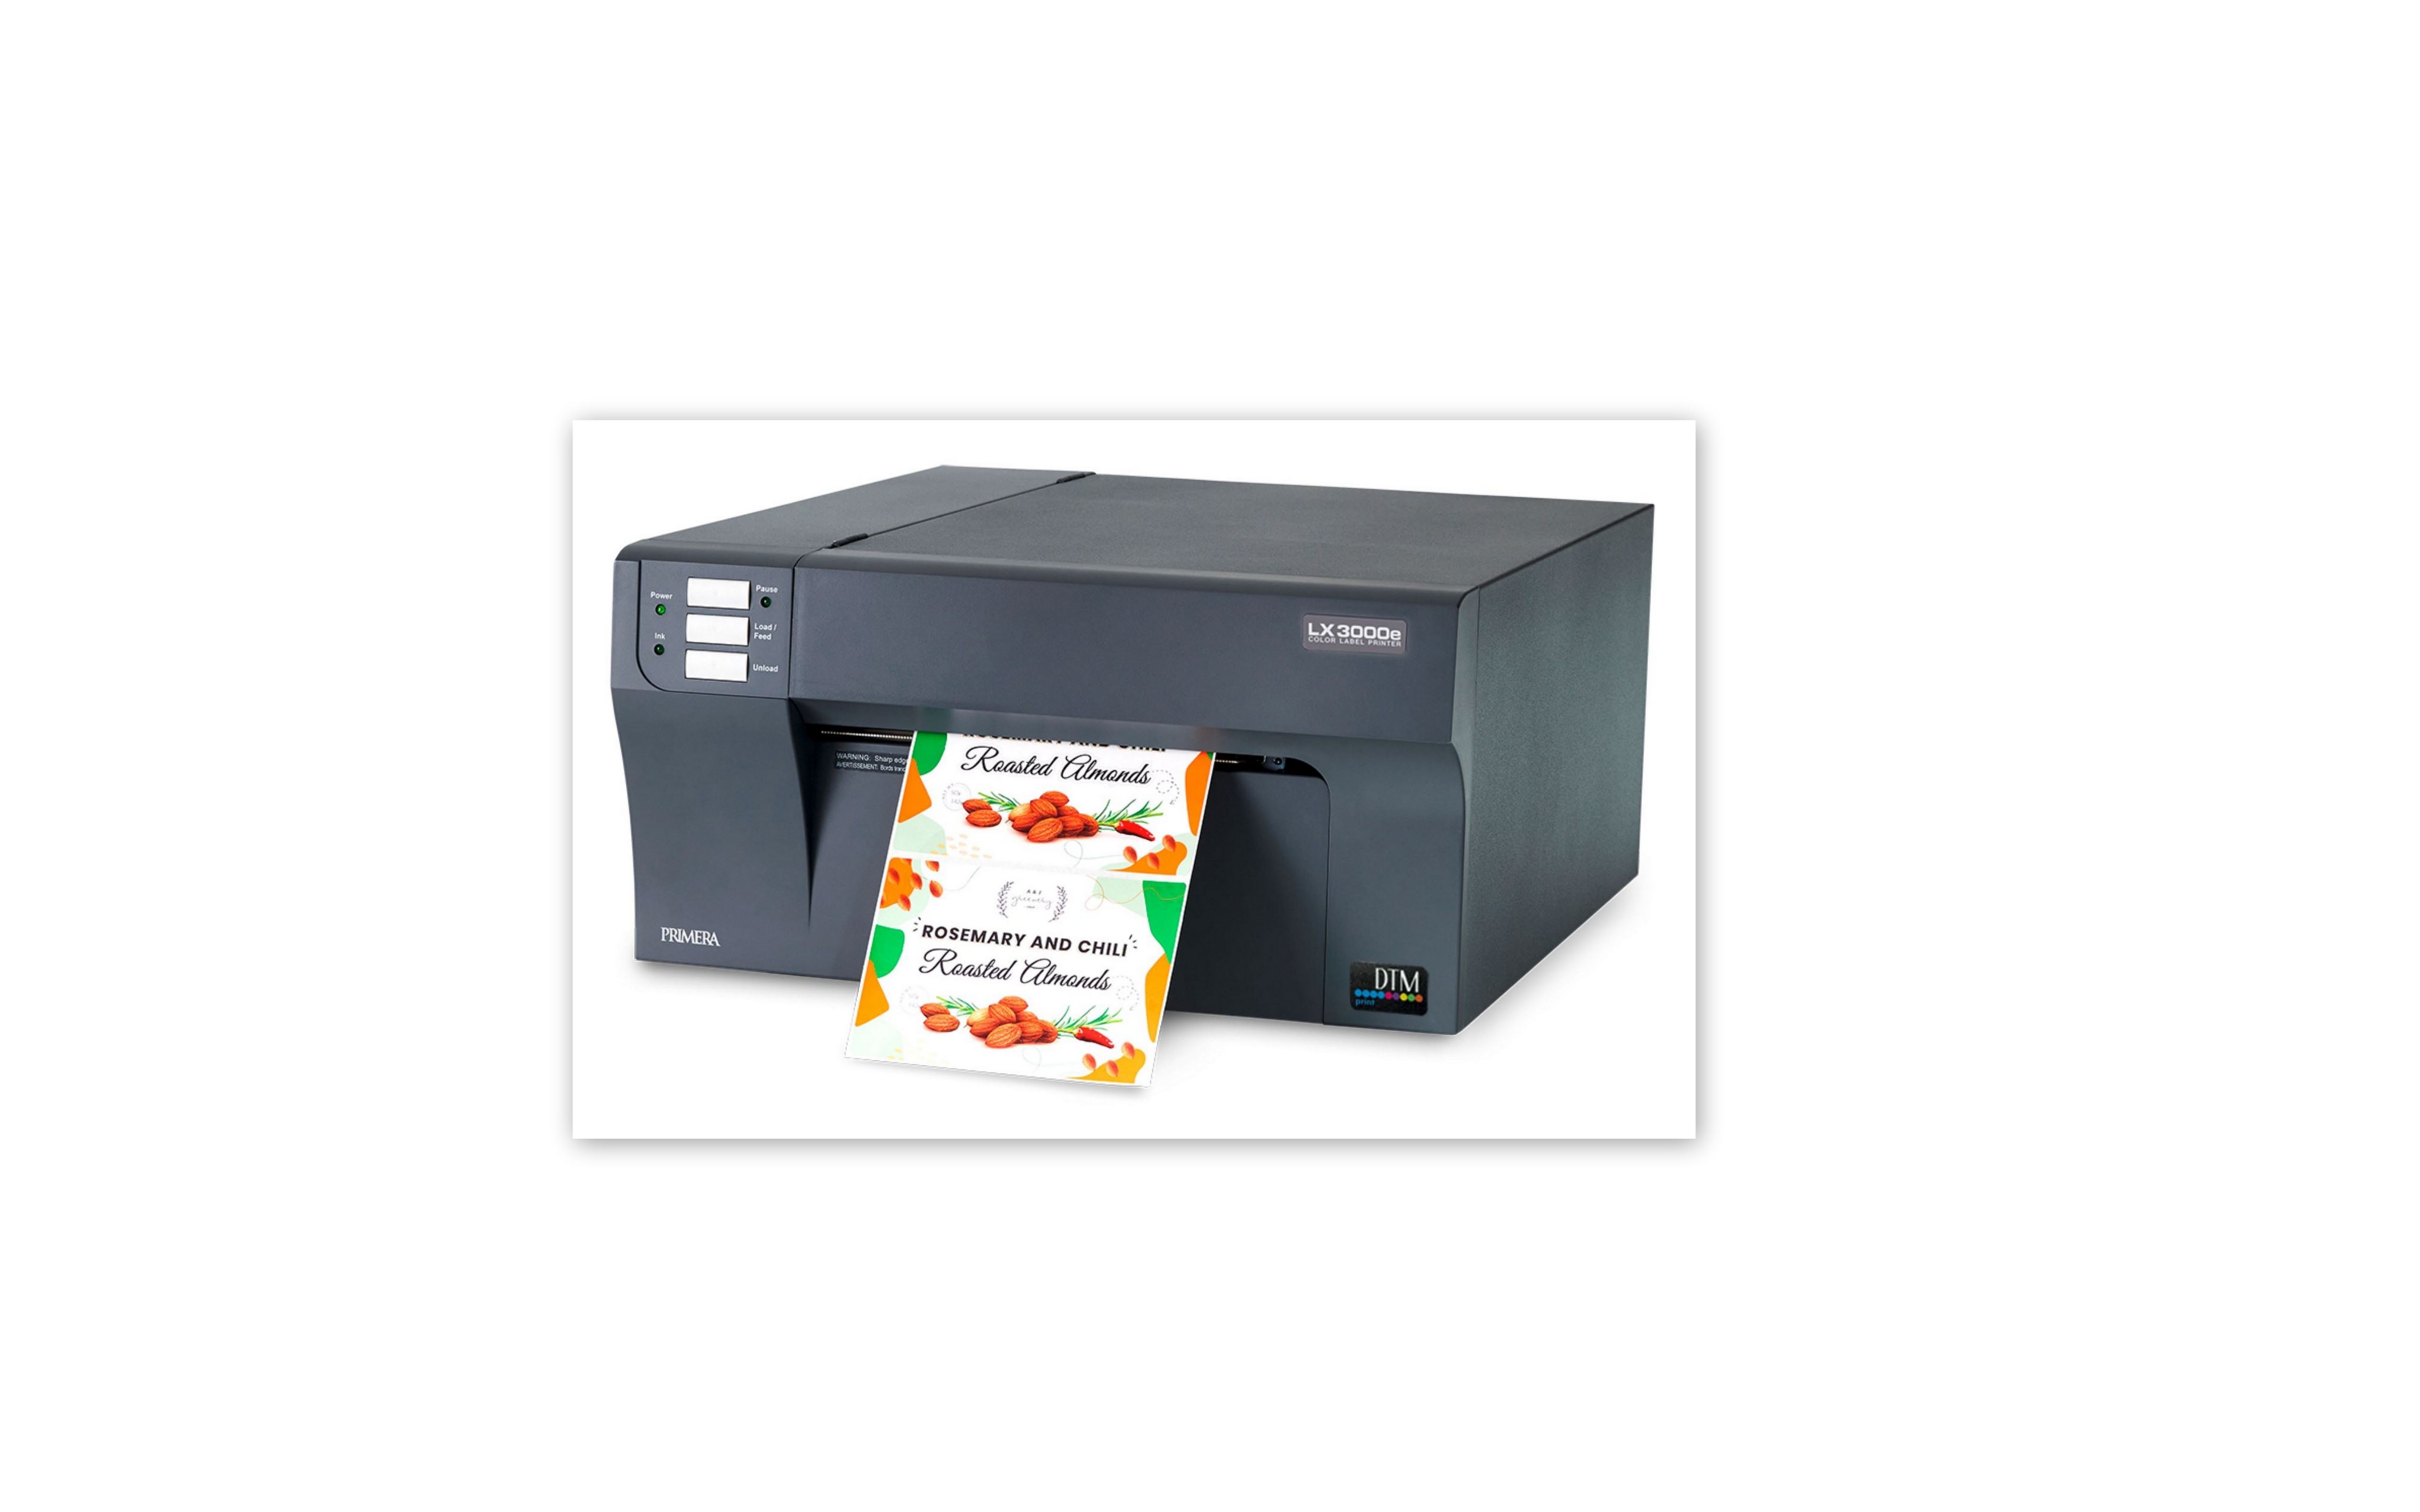 DTM PRINT Label LX3000e Label Pigment-basierte Tintentanks(CMY) Printer Color separaten Printer Netzwerkfähig drei Vollfarb-Drucktechnologie mit Inkjet WLAN Pigment